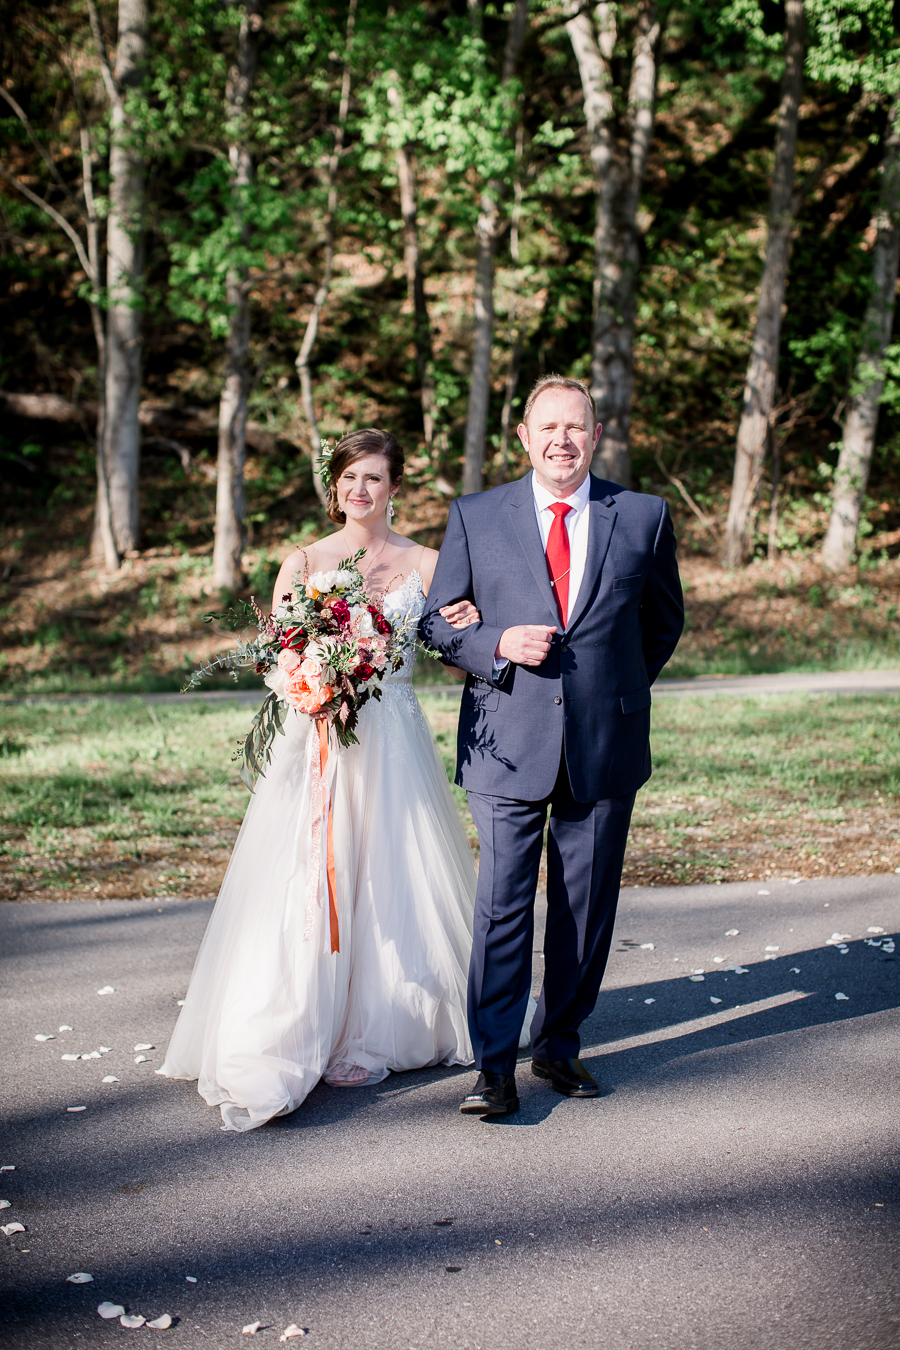 Bride and Father at this North Carolina Elopement by Knoxville Wedding Photographer, Amanda May Photos.